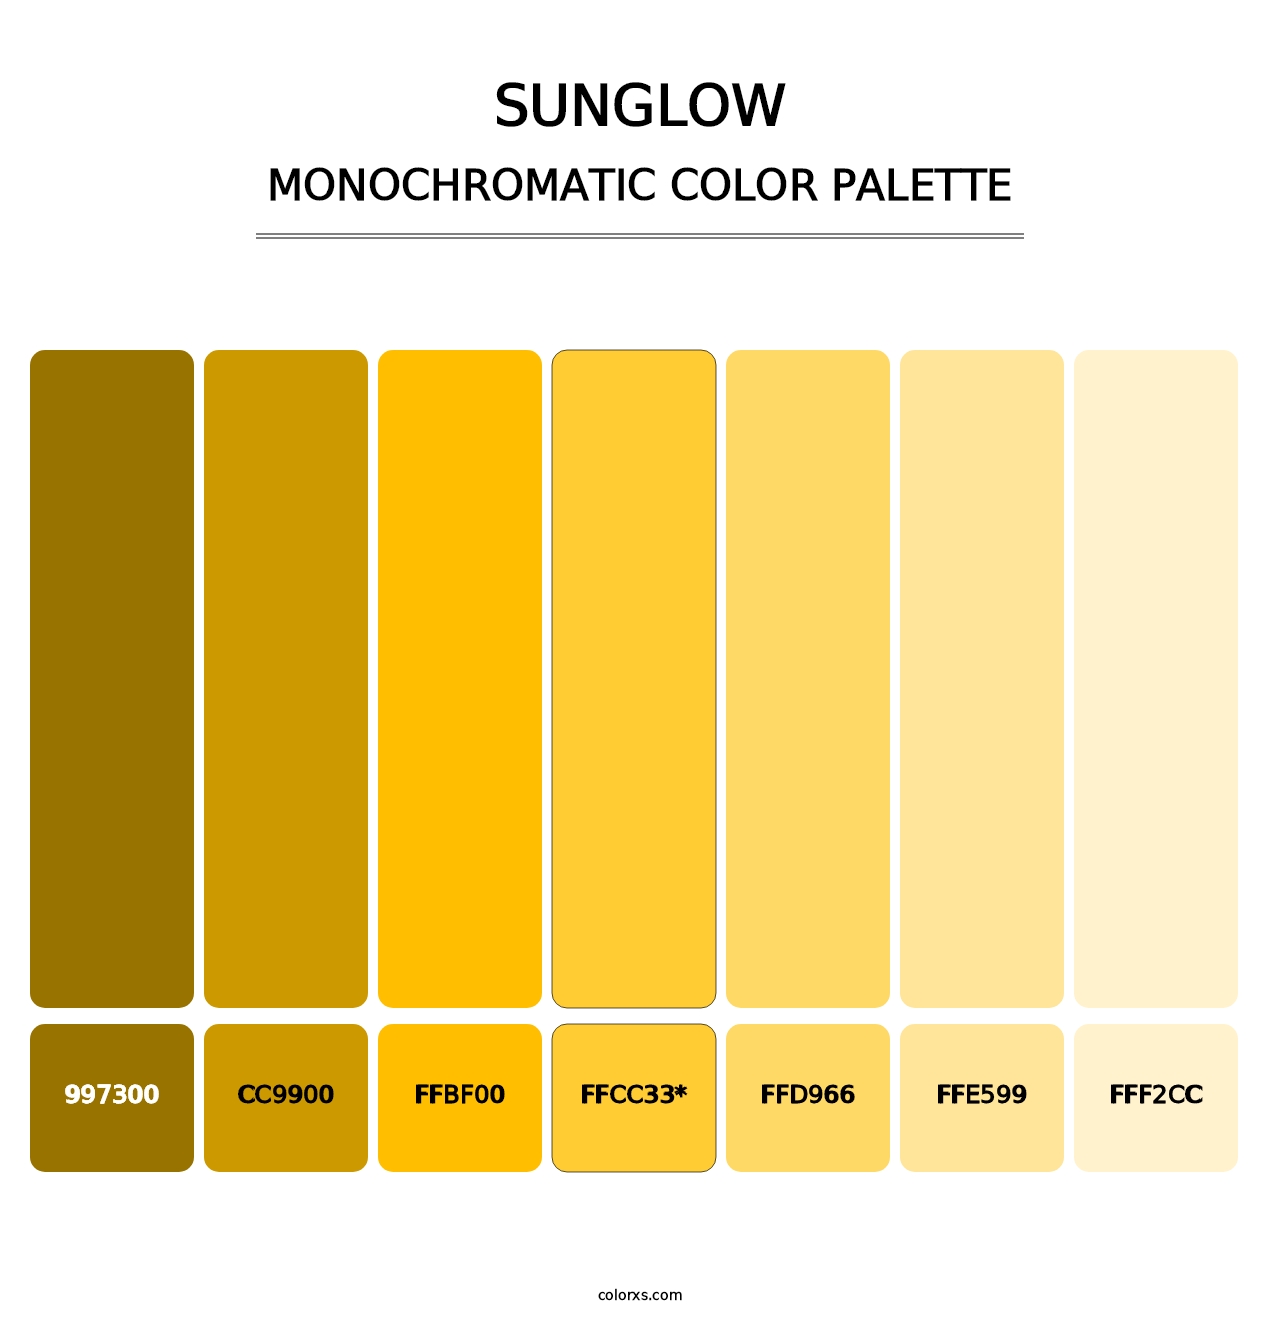 Sunglow - Monochromatic Color Palette